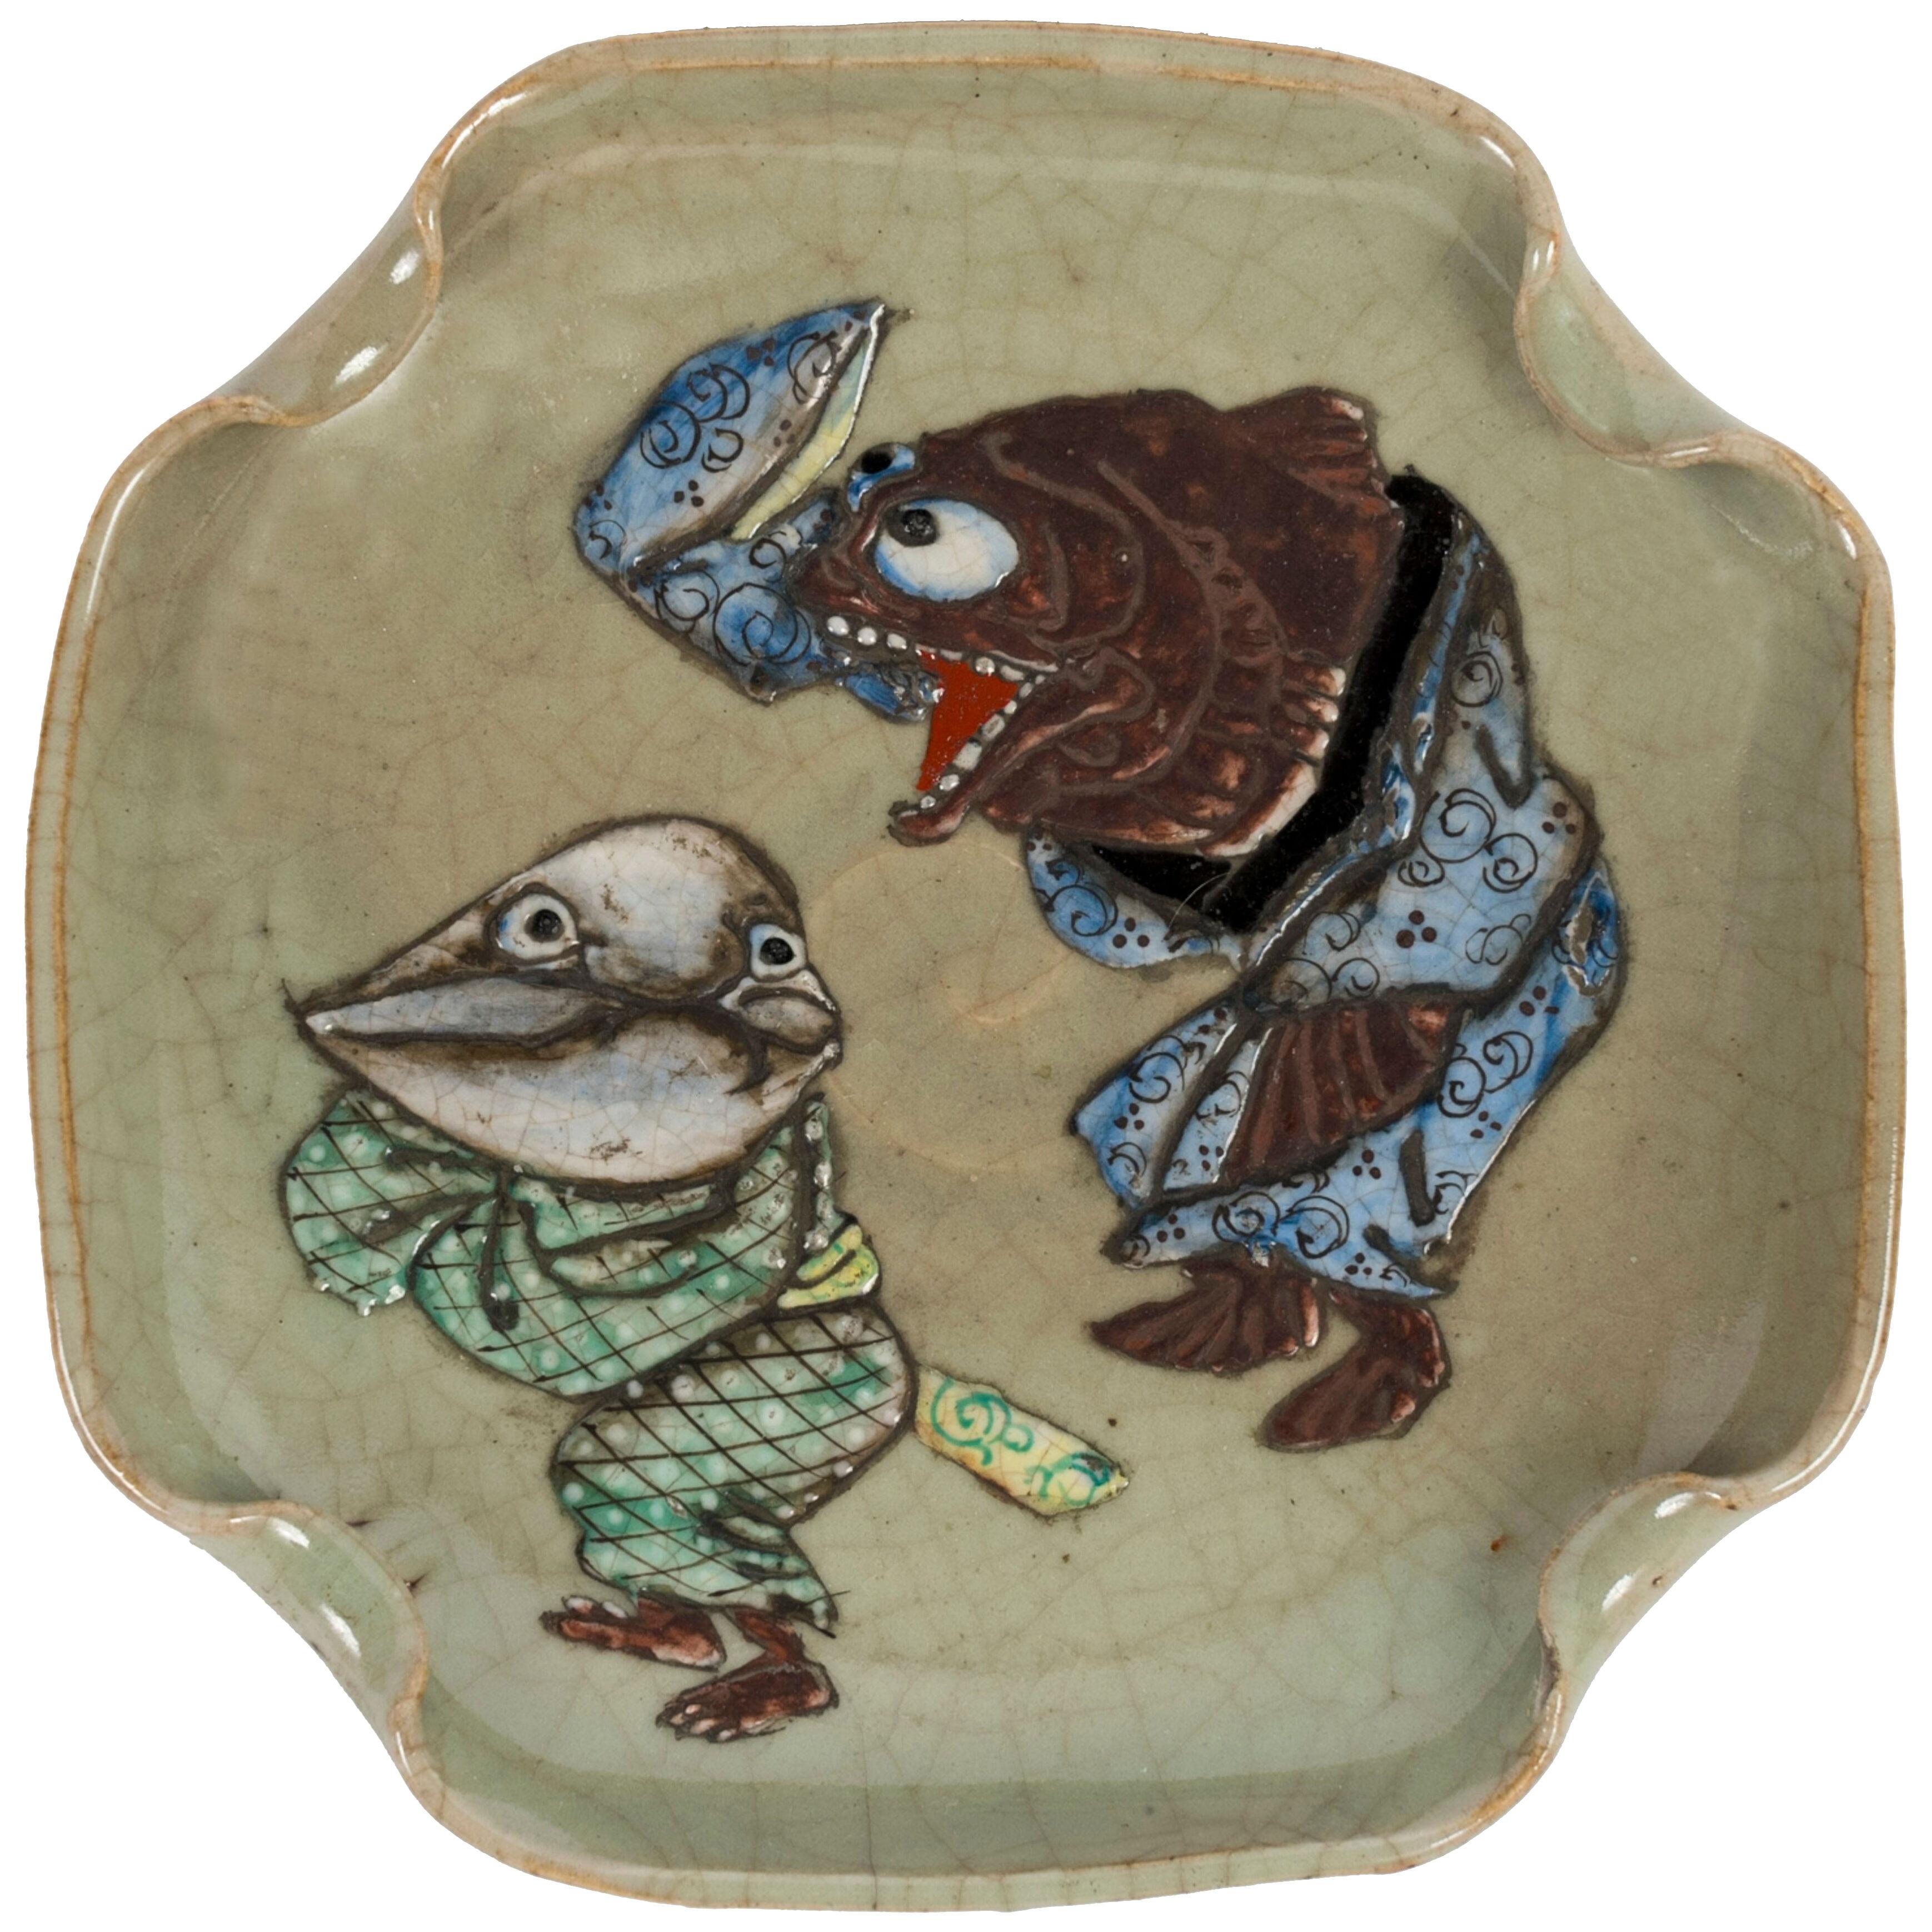 Japanese celadon ceramic with fish yokaï